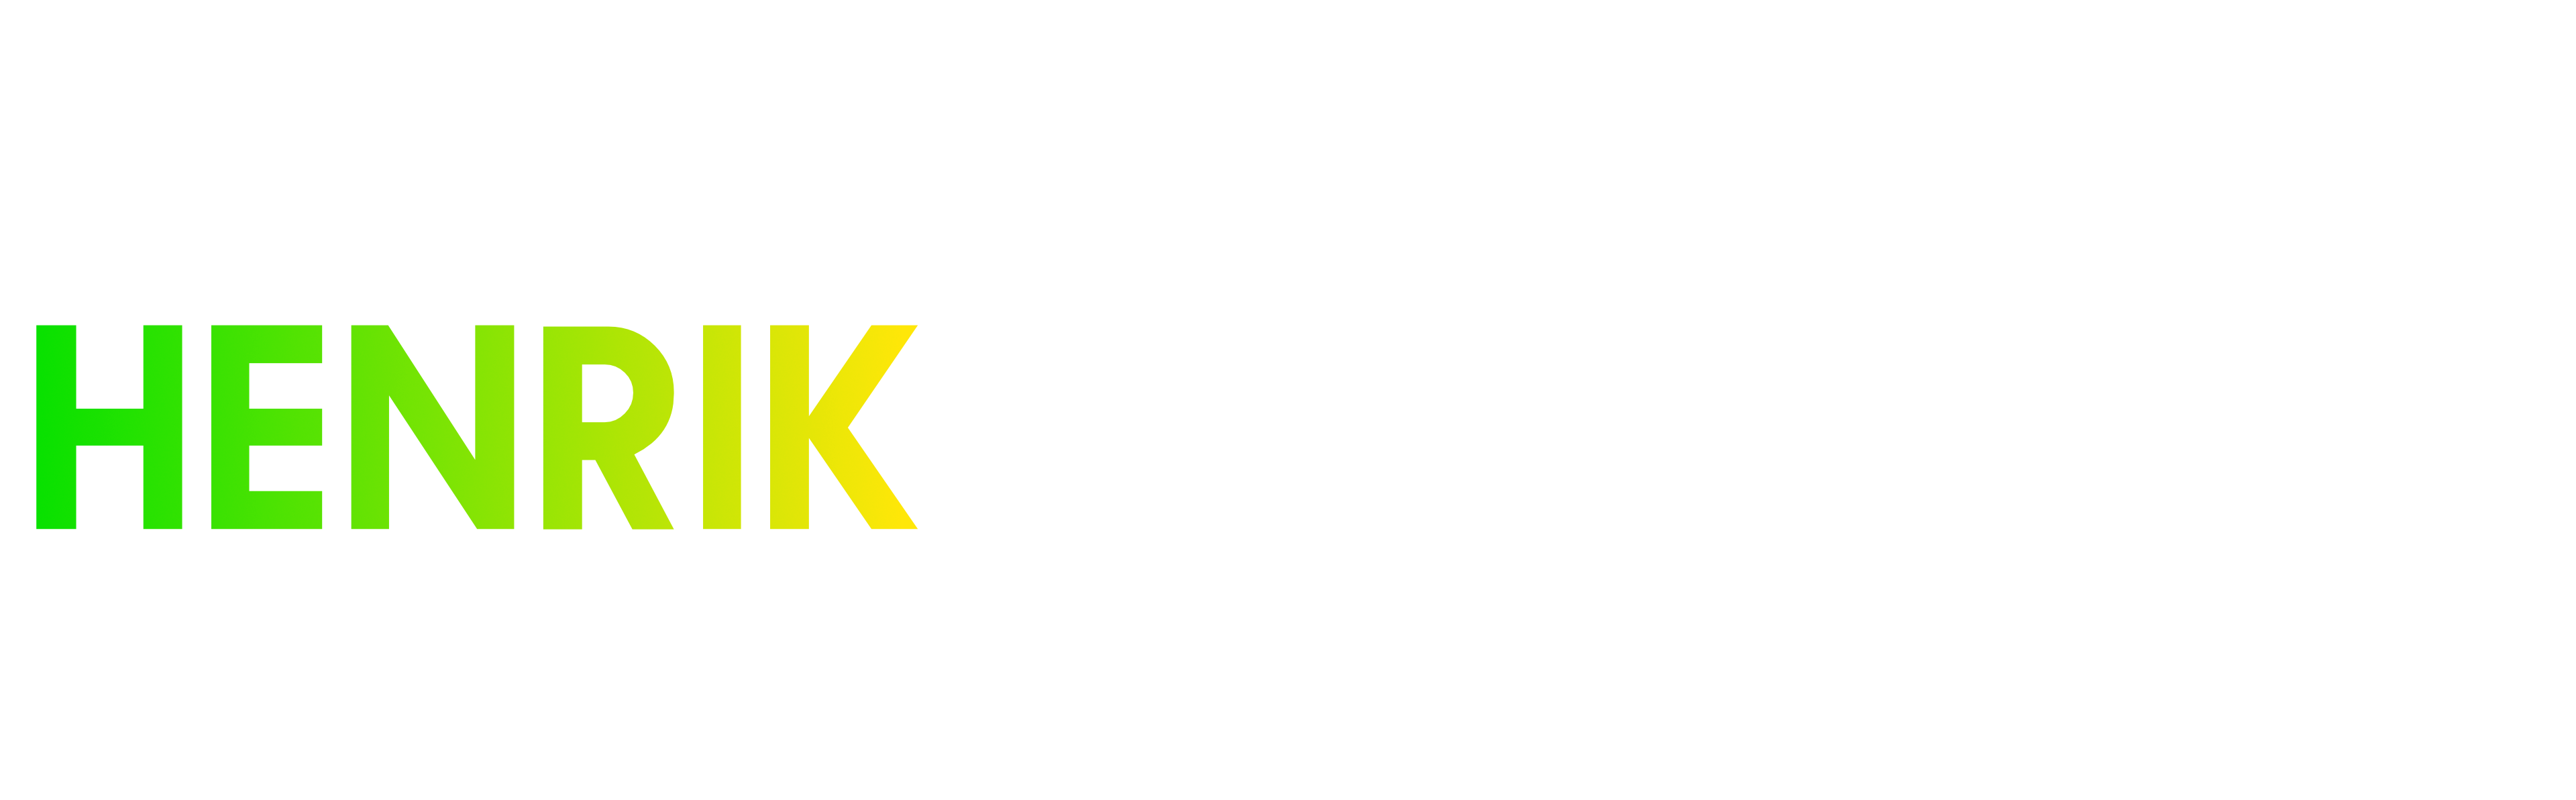 Henrik Fährmann Web- Videoproduktion Logo